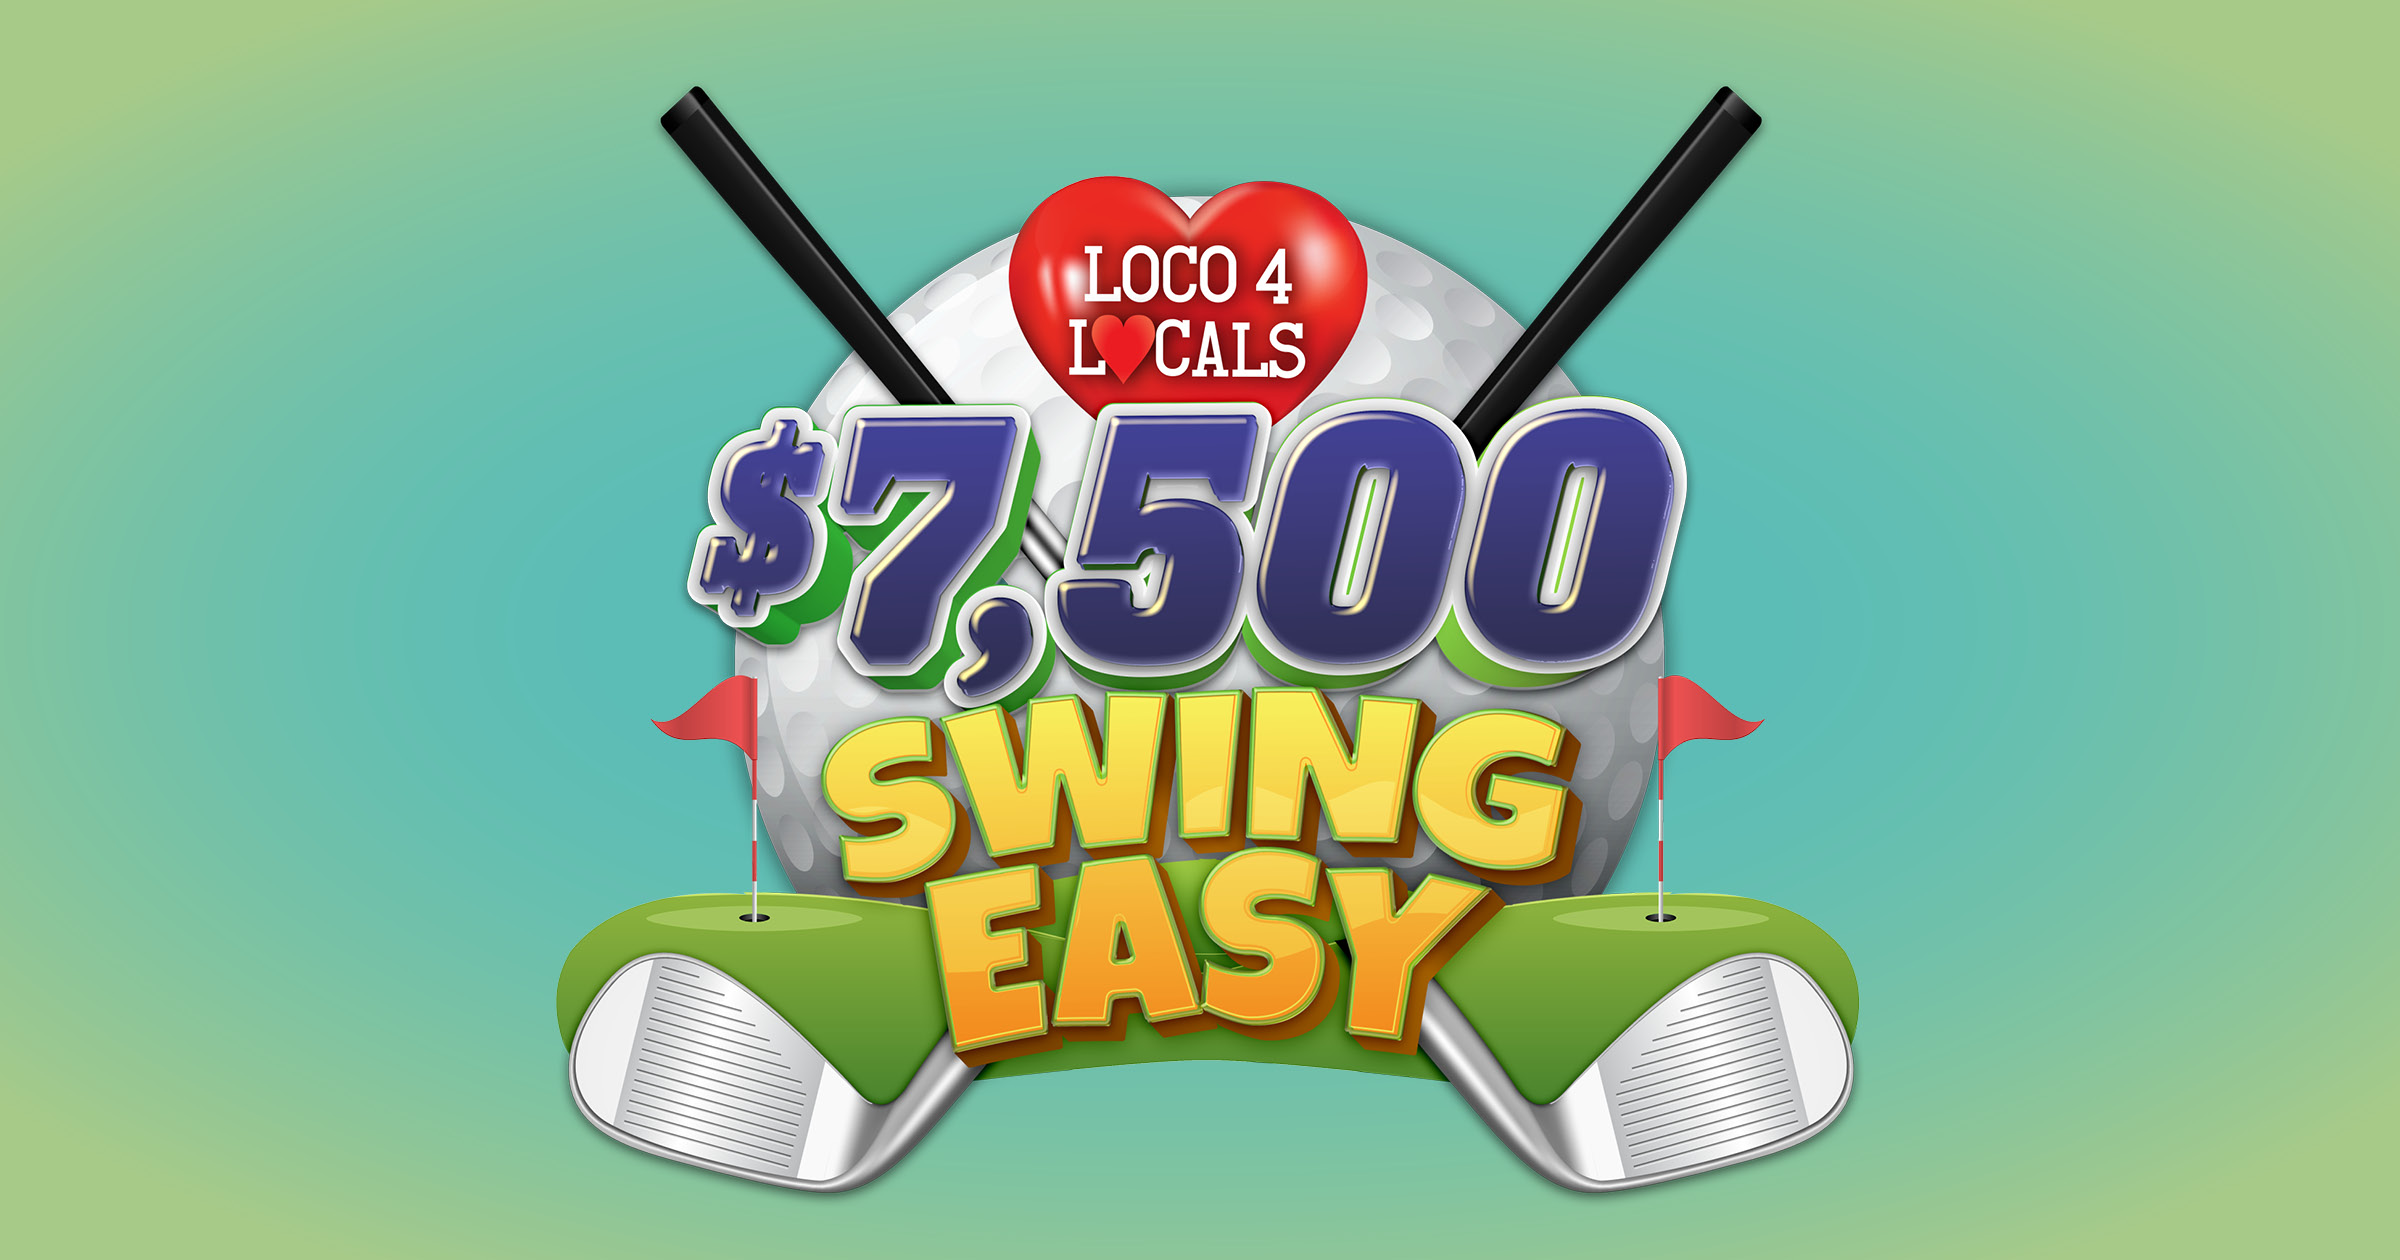 Loco 4 Locals – $7,500 Swing Easy